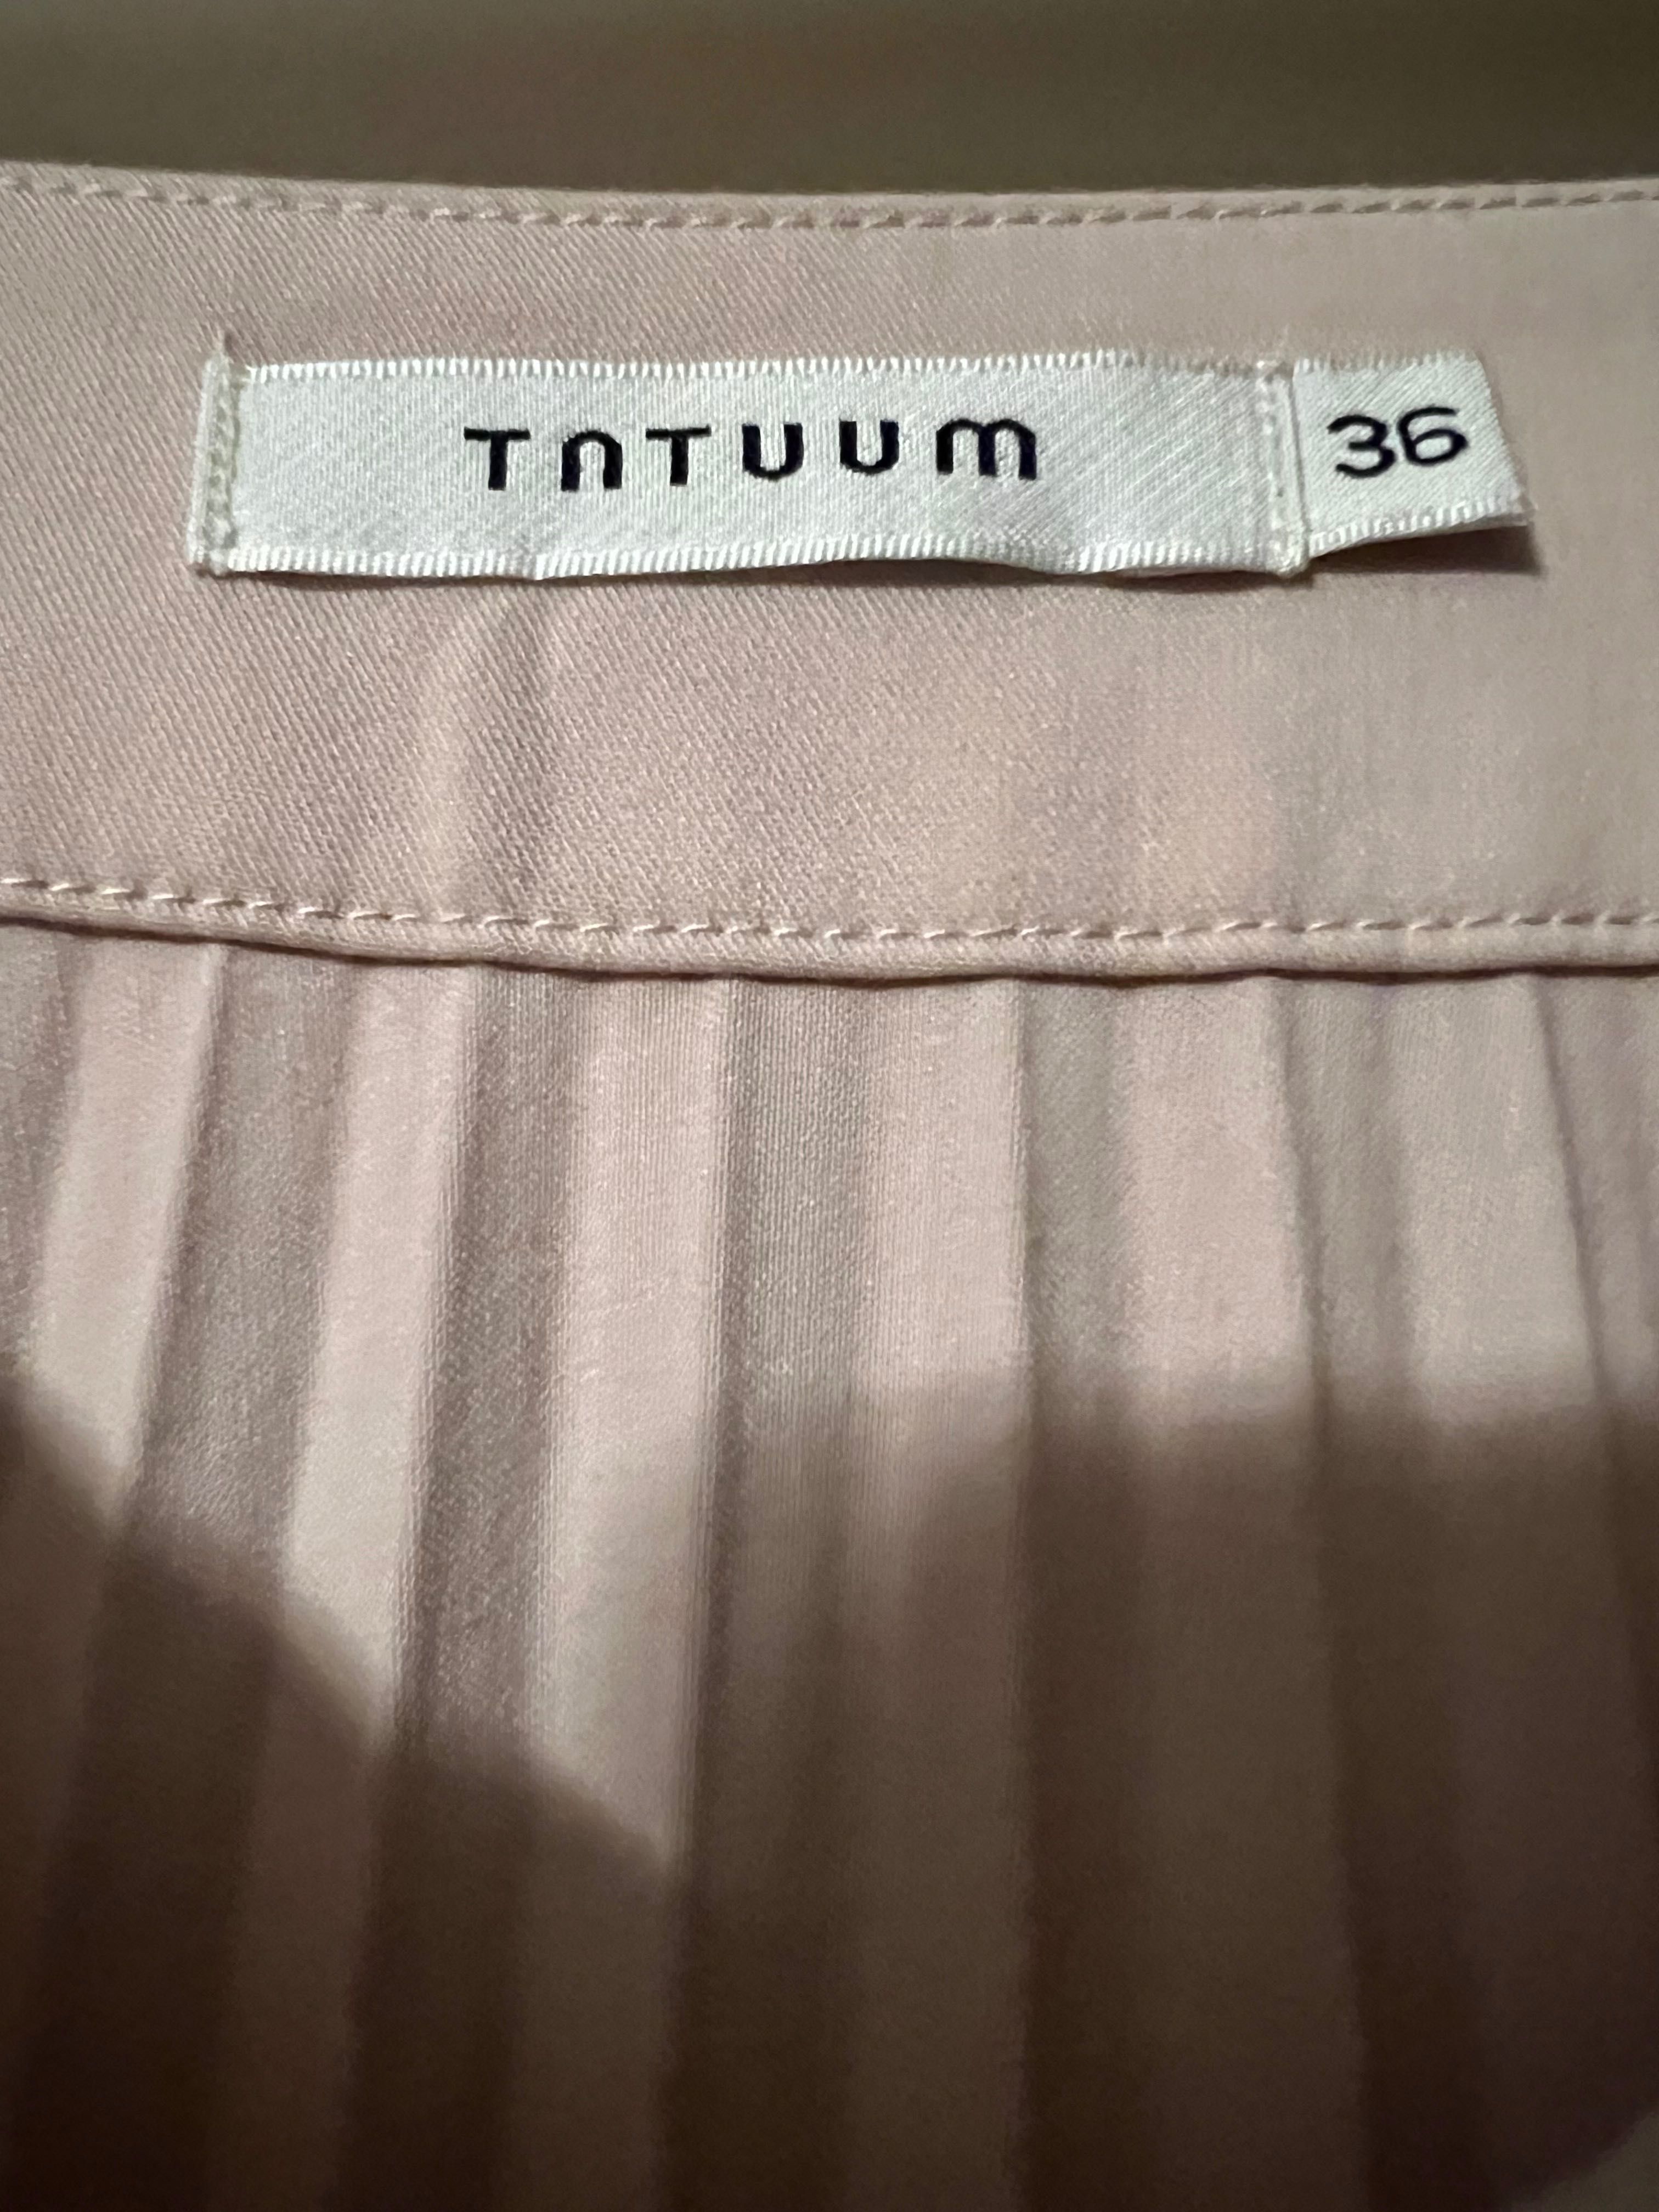 Spódnica plisowana roz 36 Tatuum